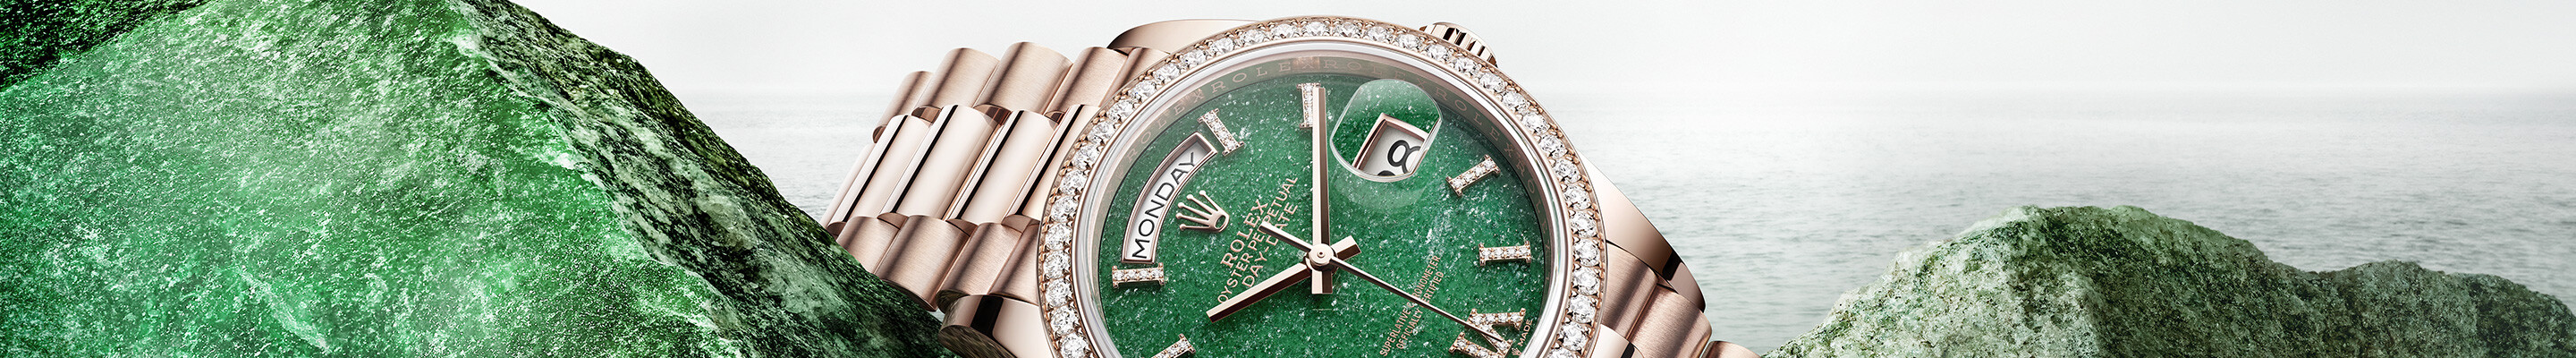 Rolex Day-Date Watches | Zegg & Cerlati